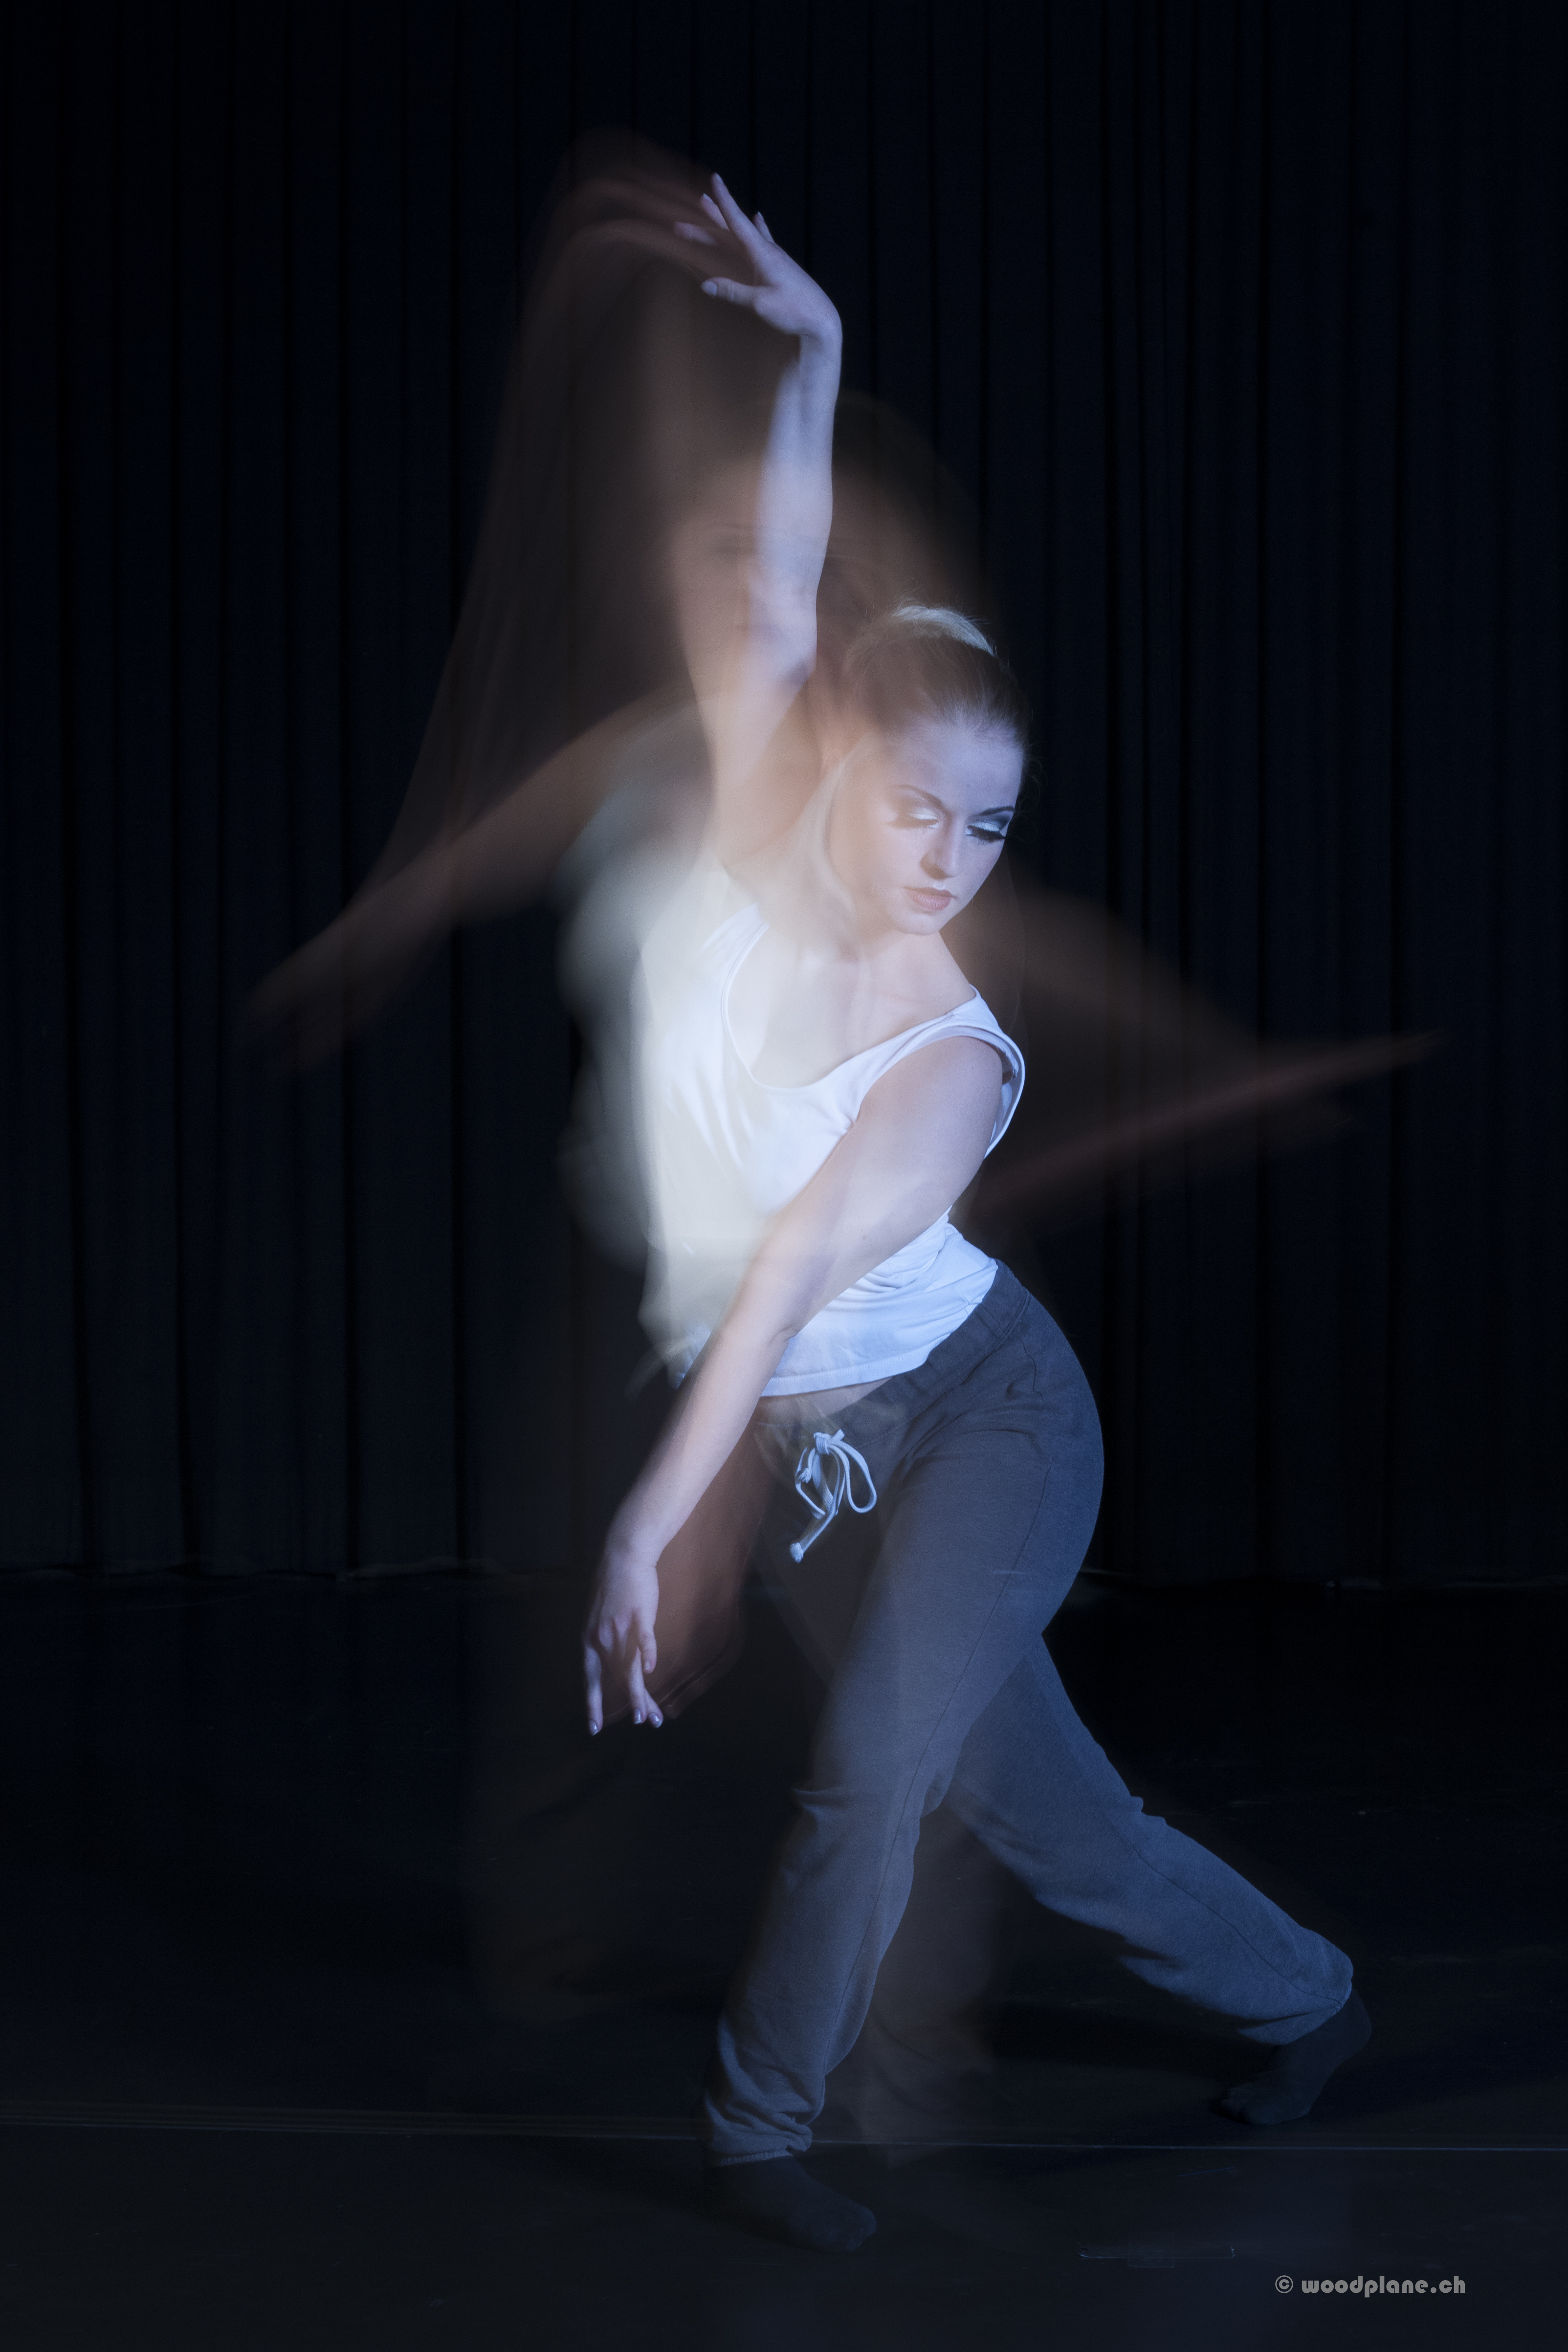 Photoshooting "Dancer"